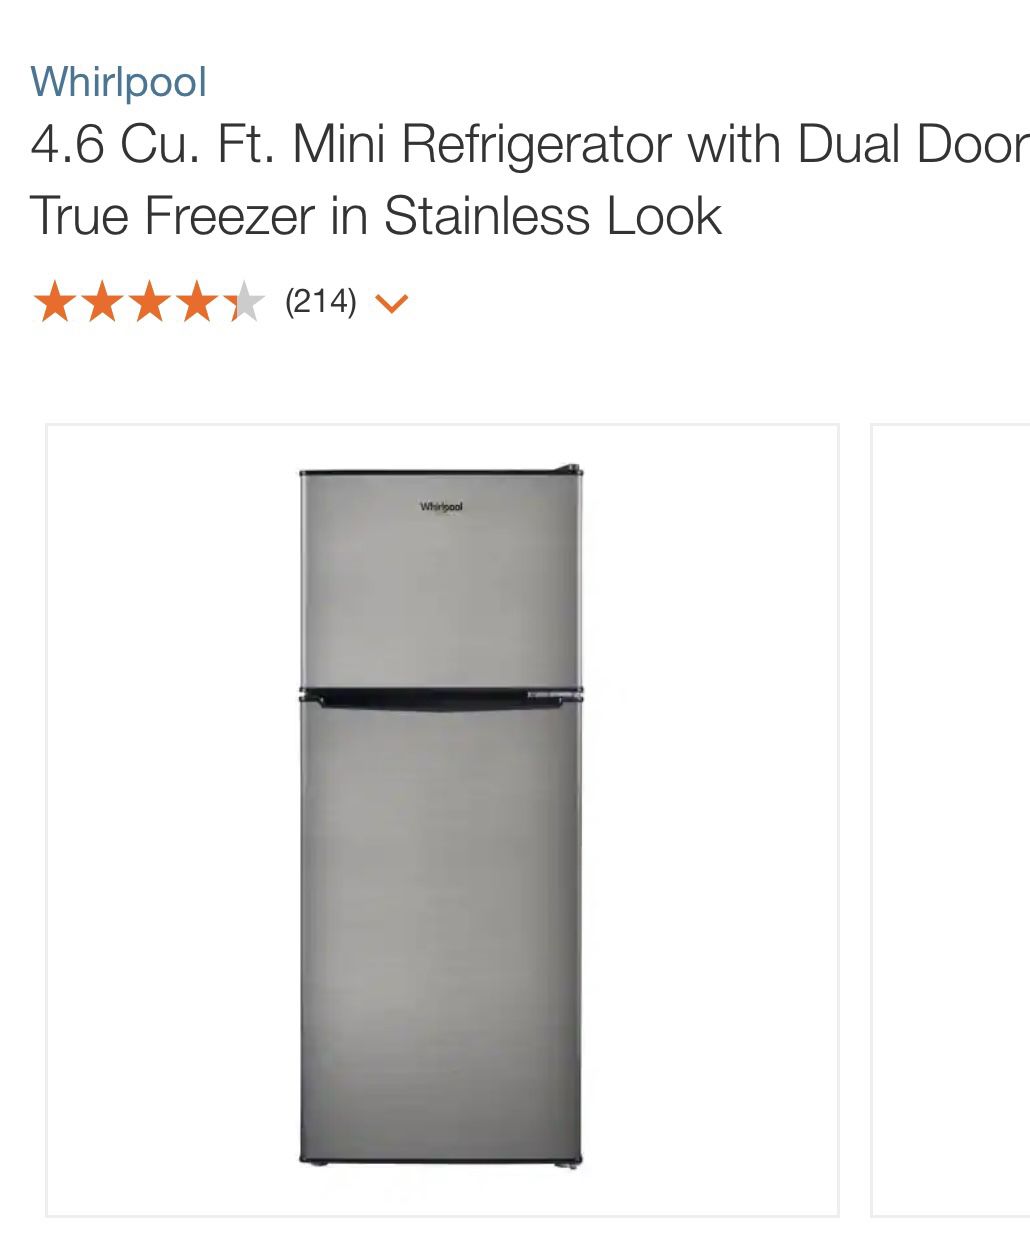 4.6 Cu. Ft. Mini Refrigerator with Dual Door True Freezer in Stainless Look + Microwave